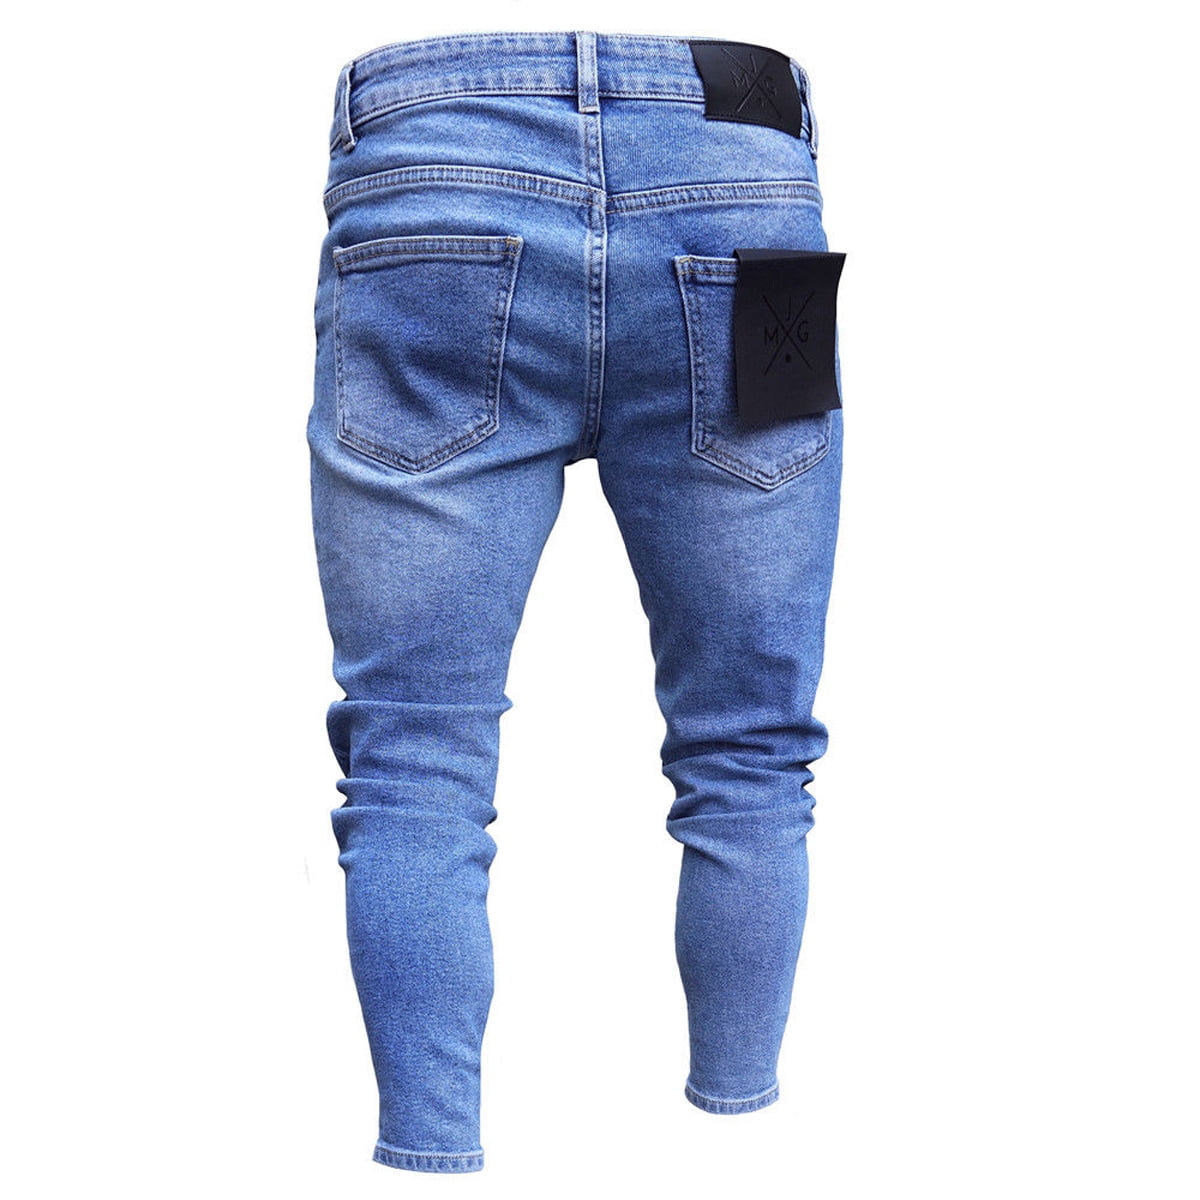 Jeans Ma&Baby Biker Frayed M Trousers Men Denim Ripped Slim Blue Pants Stretch Fit